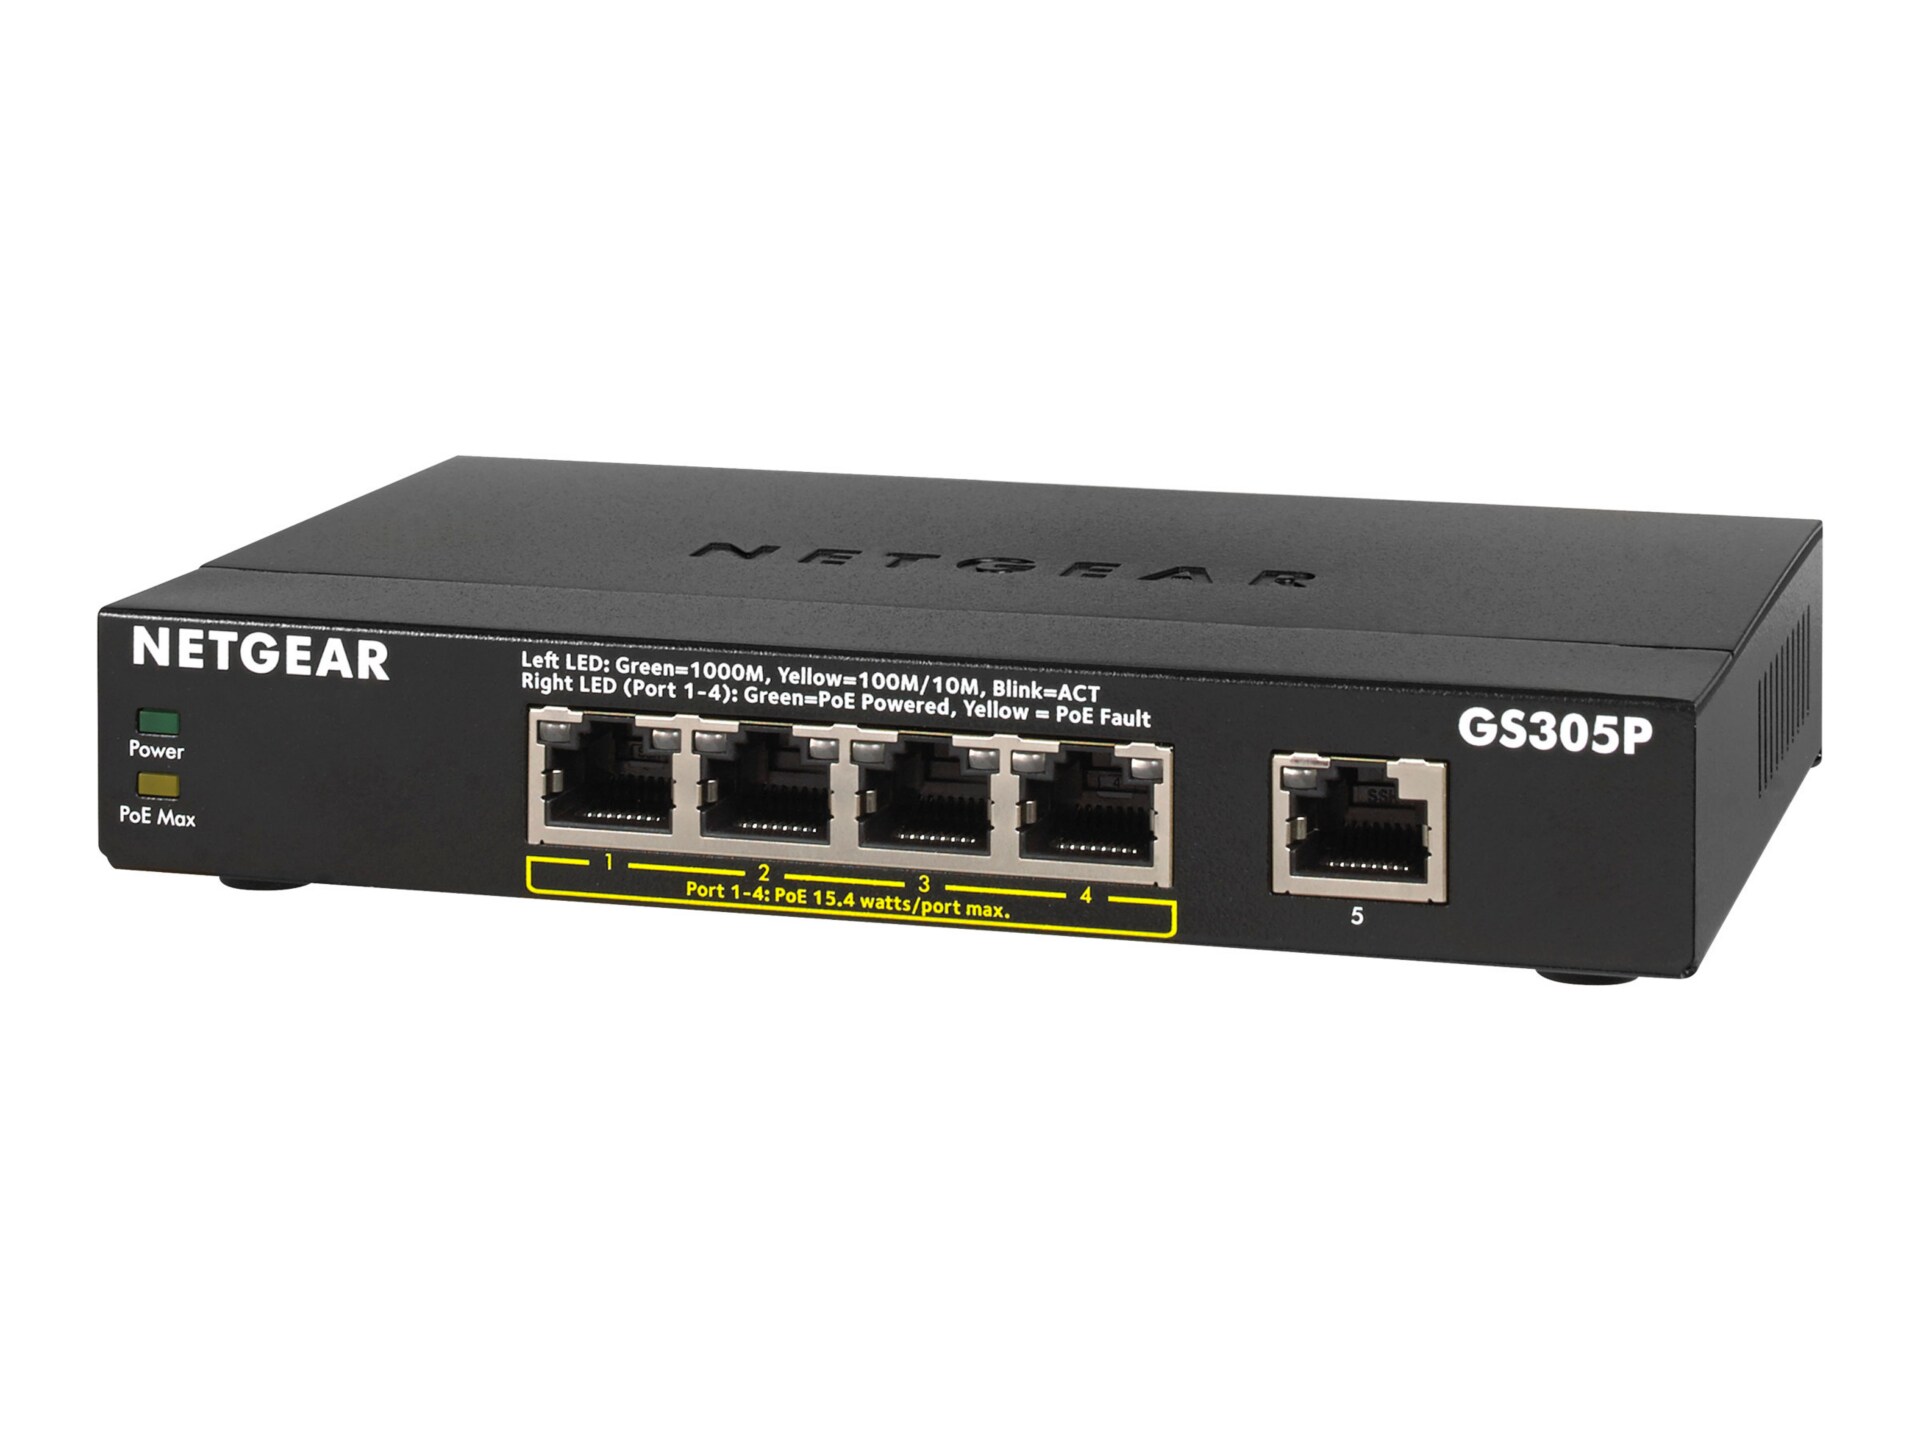 NETGEAR GS305Pv2 - switch - 5 ports - unmanaged